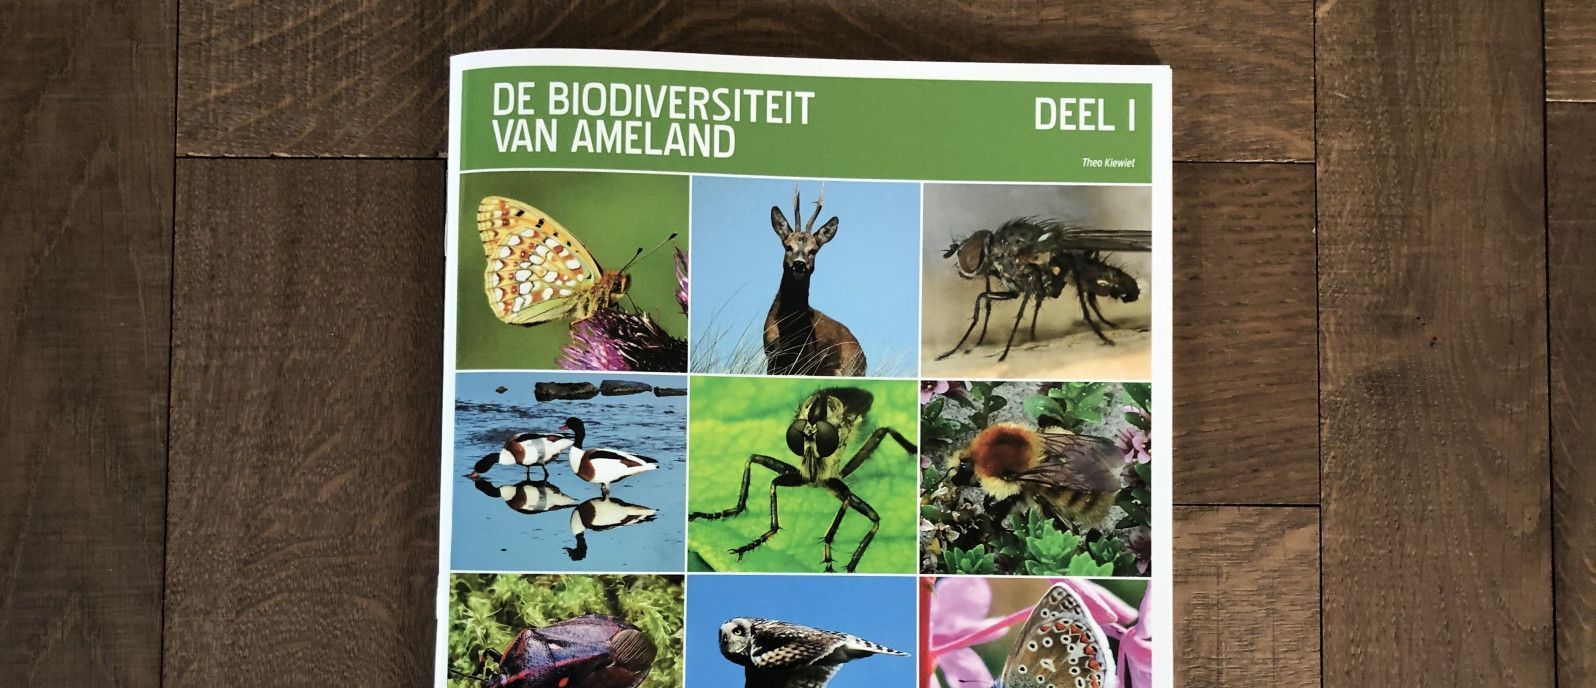 De biodiversiteit van Ameland - webshop VVV Ameland